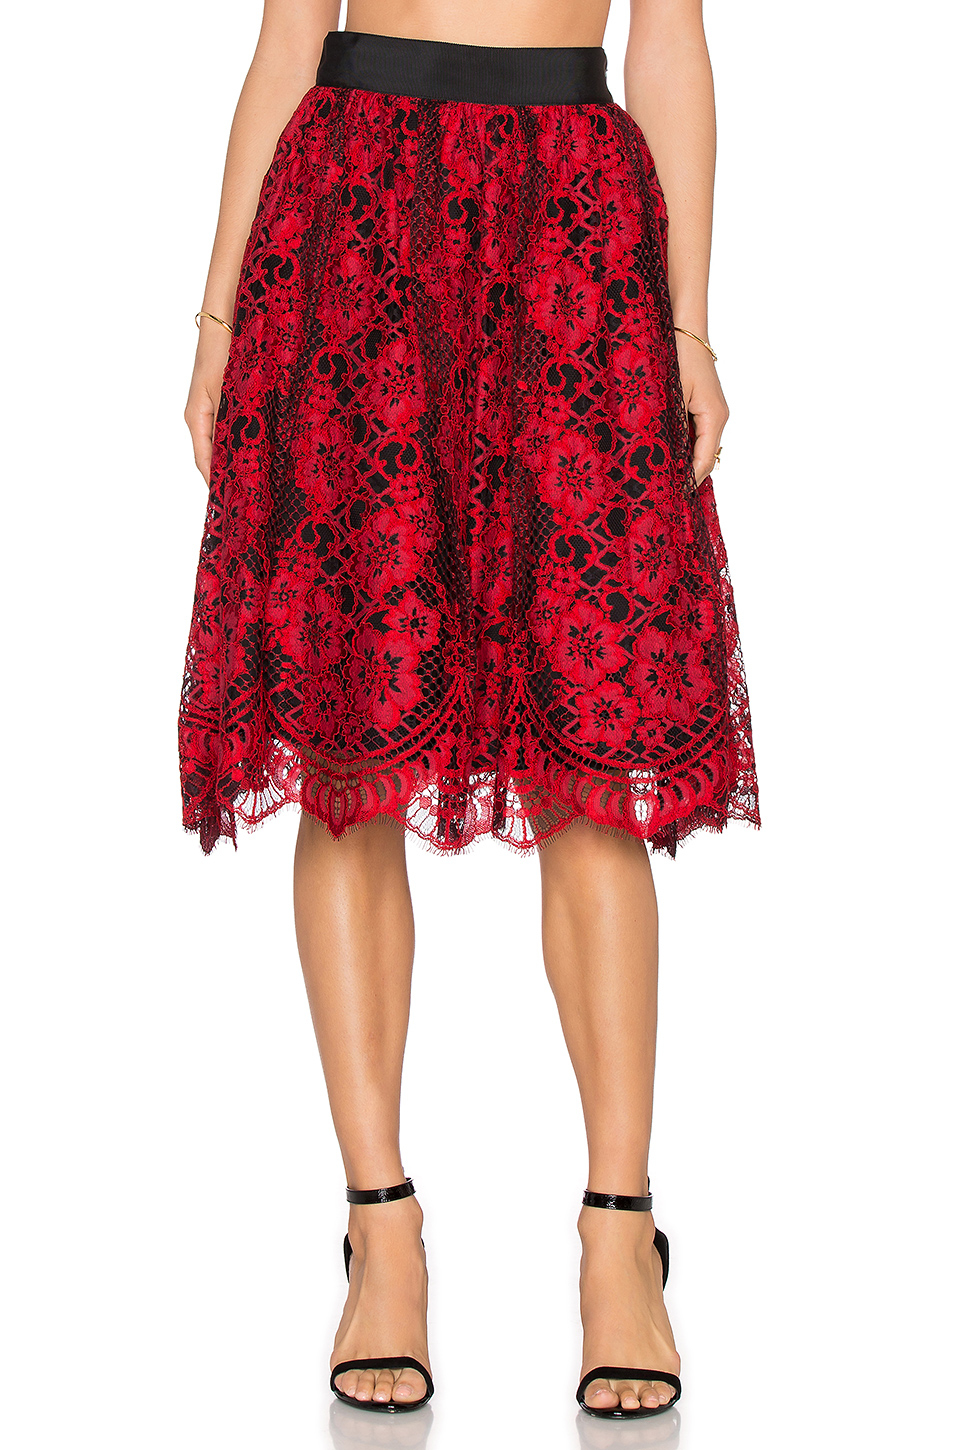 Lyst - Alexis Lorelei Flare Skirt in Red